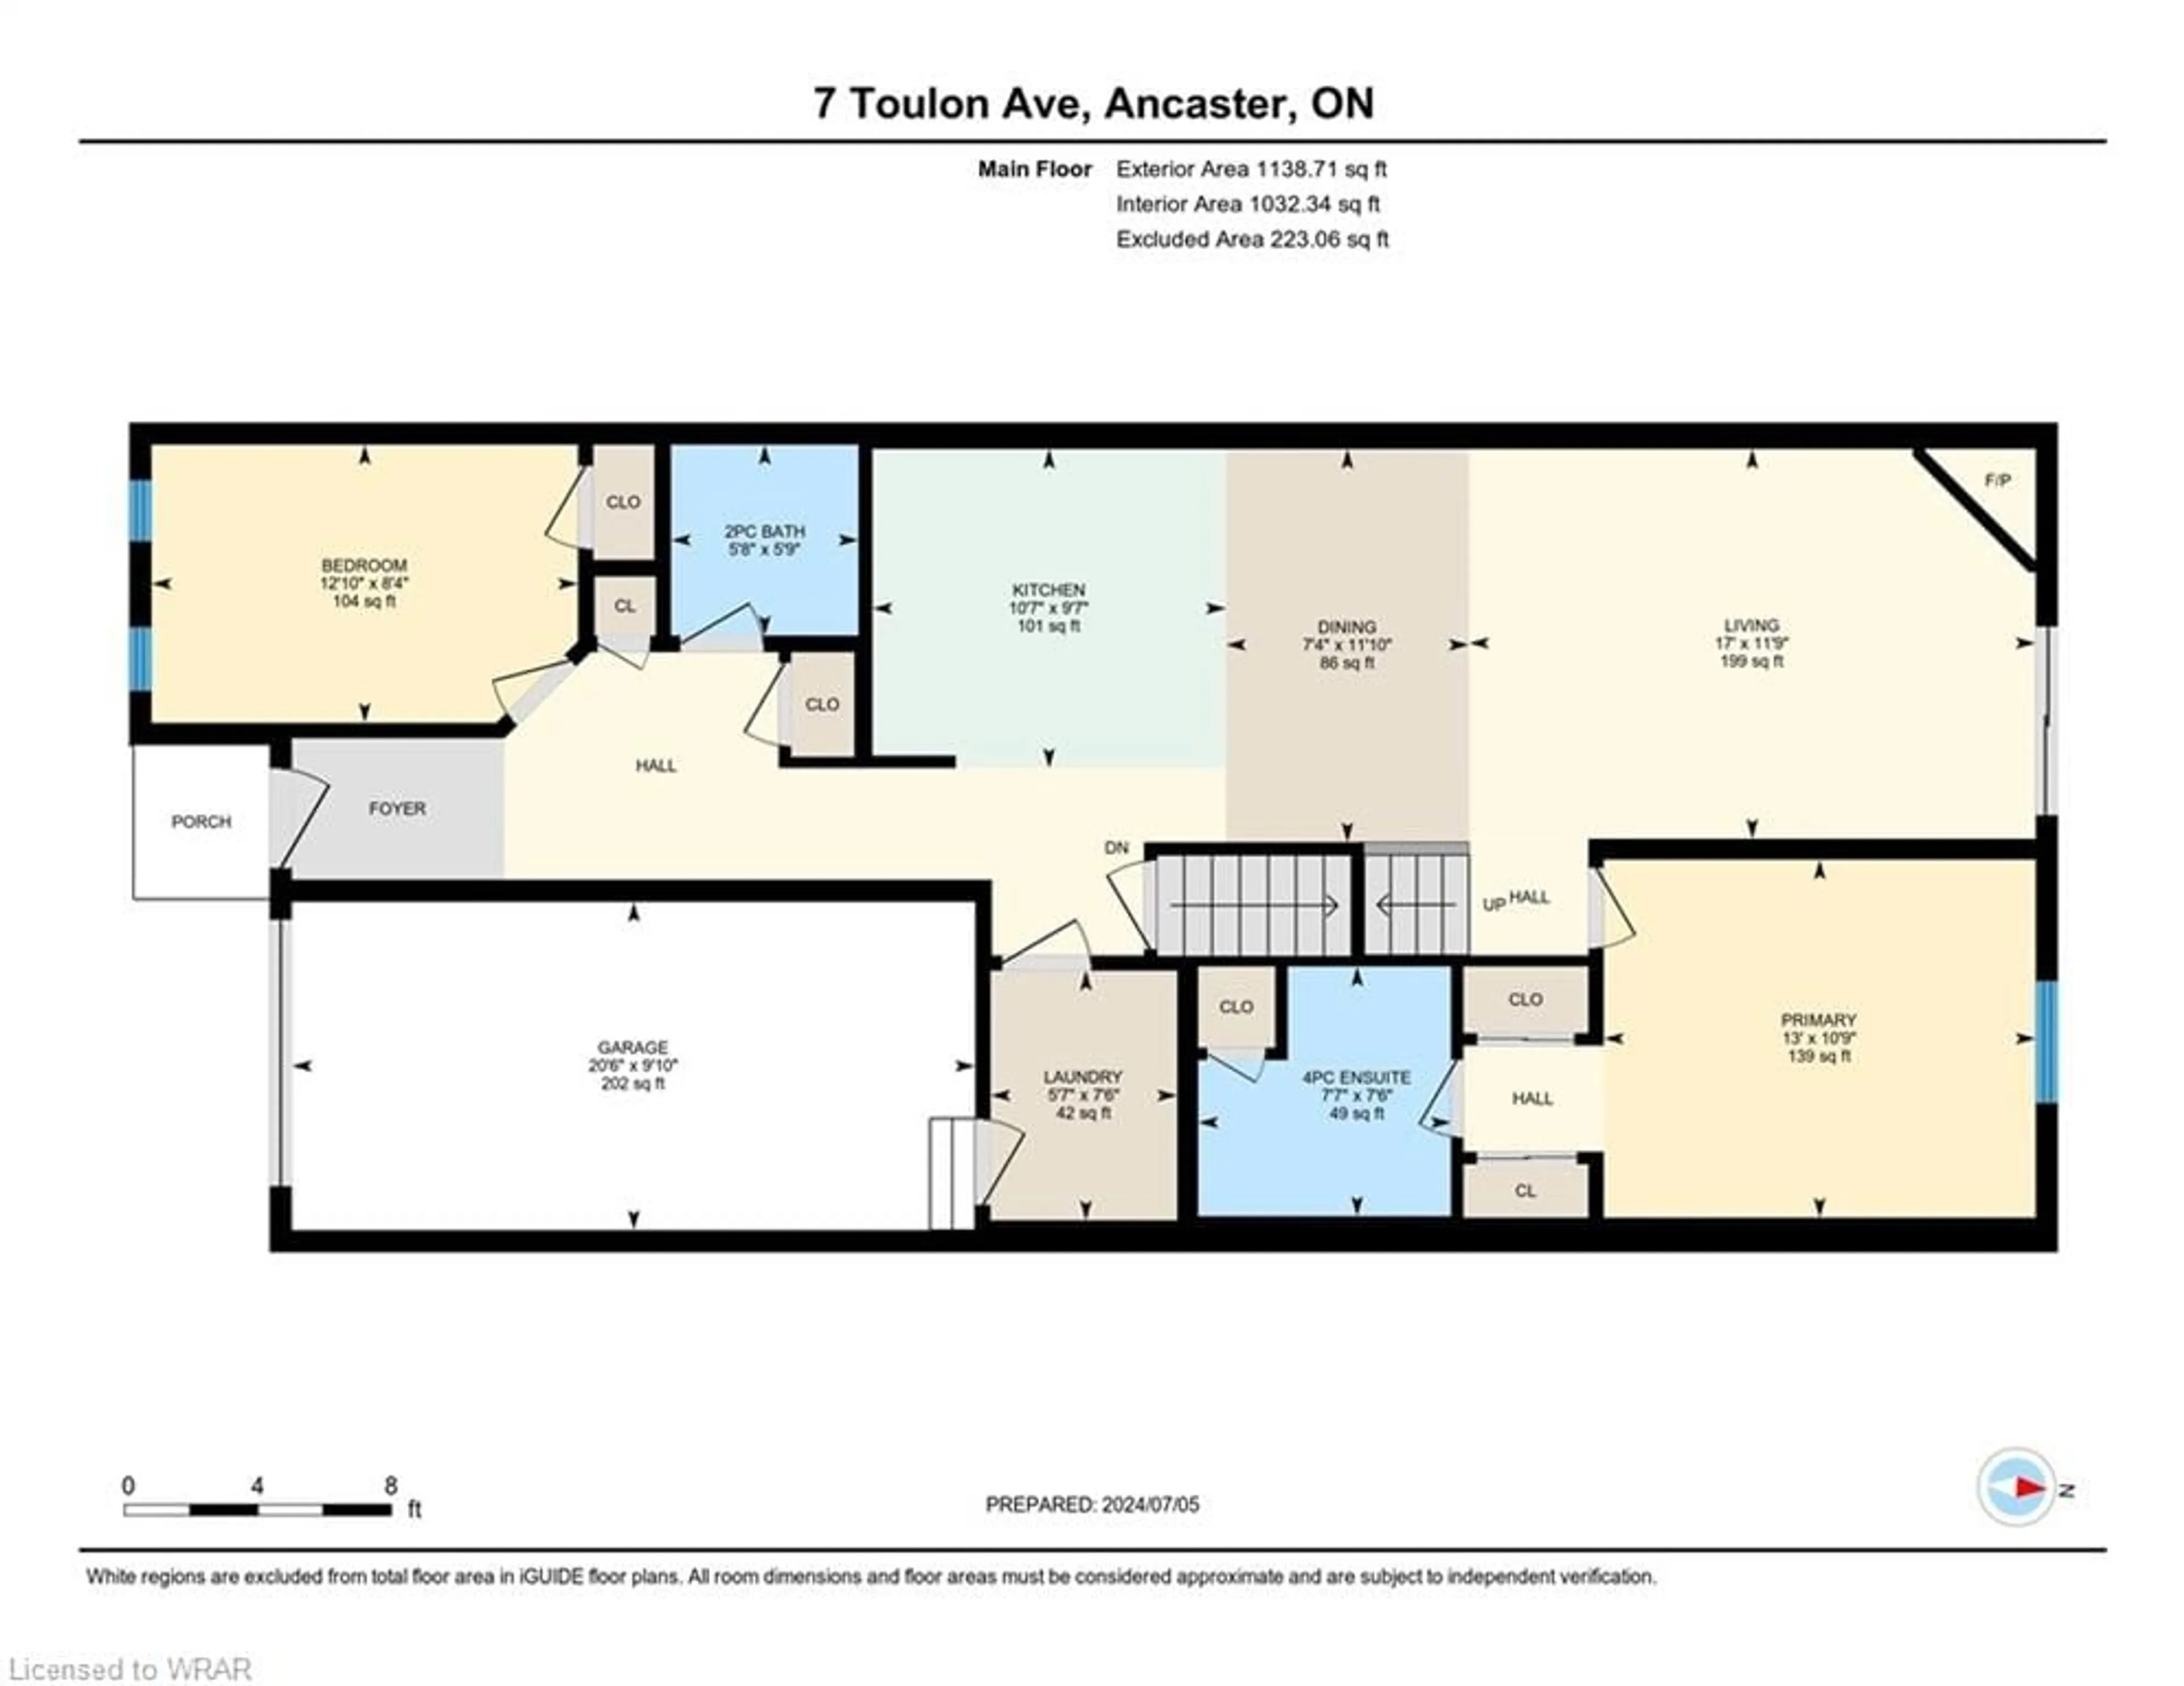 Floor plan for 7 Toulon Ave, Ancaster Ontario L9G 3K9